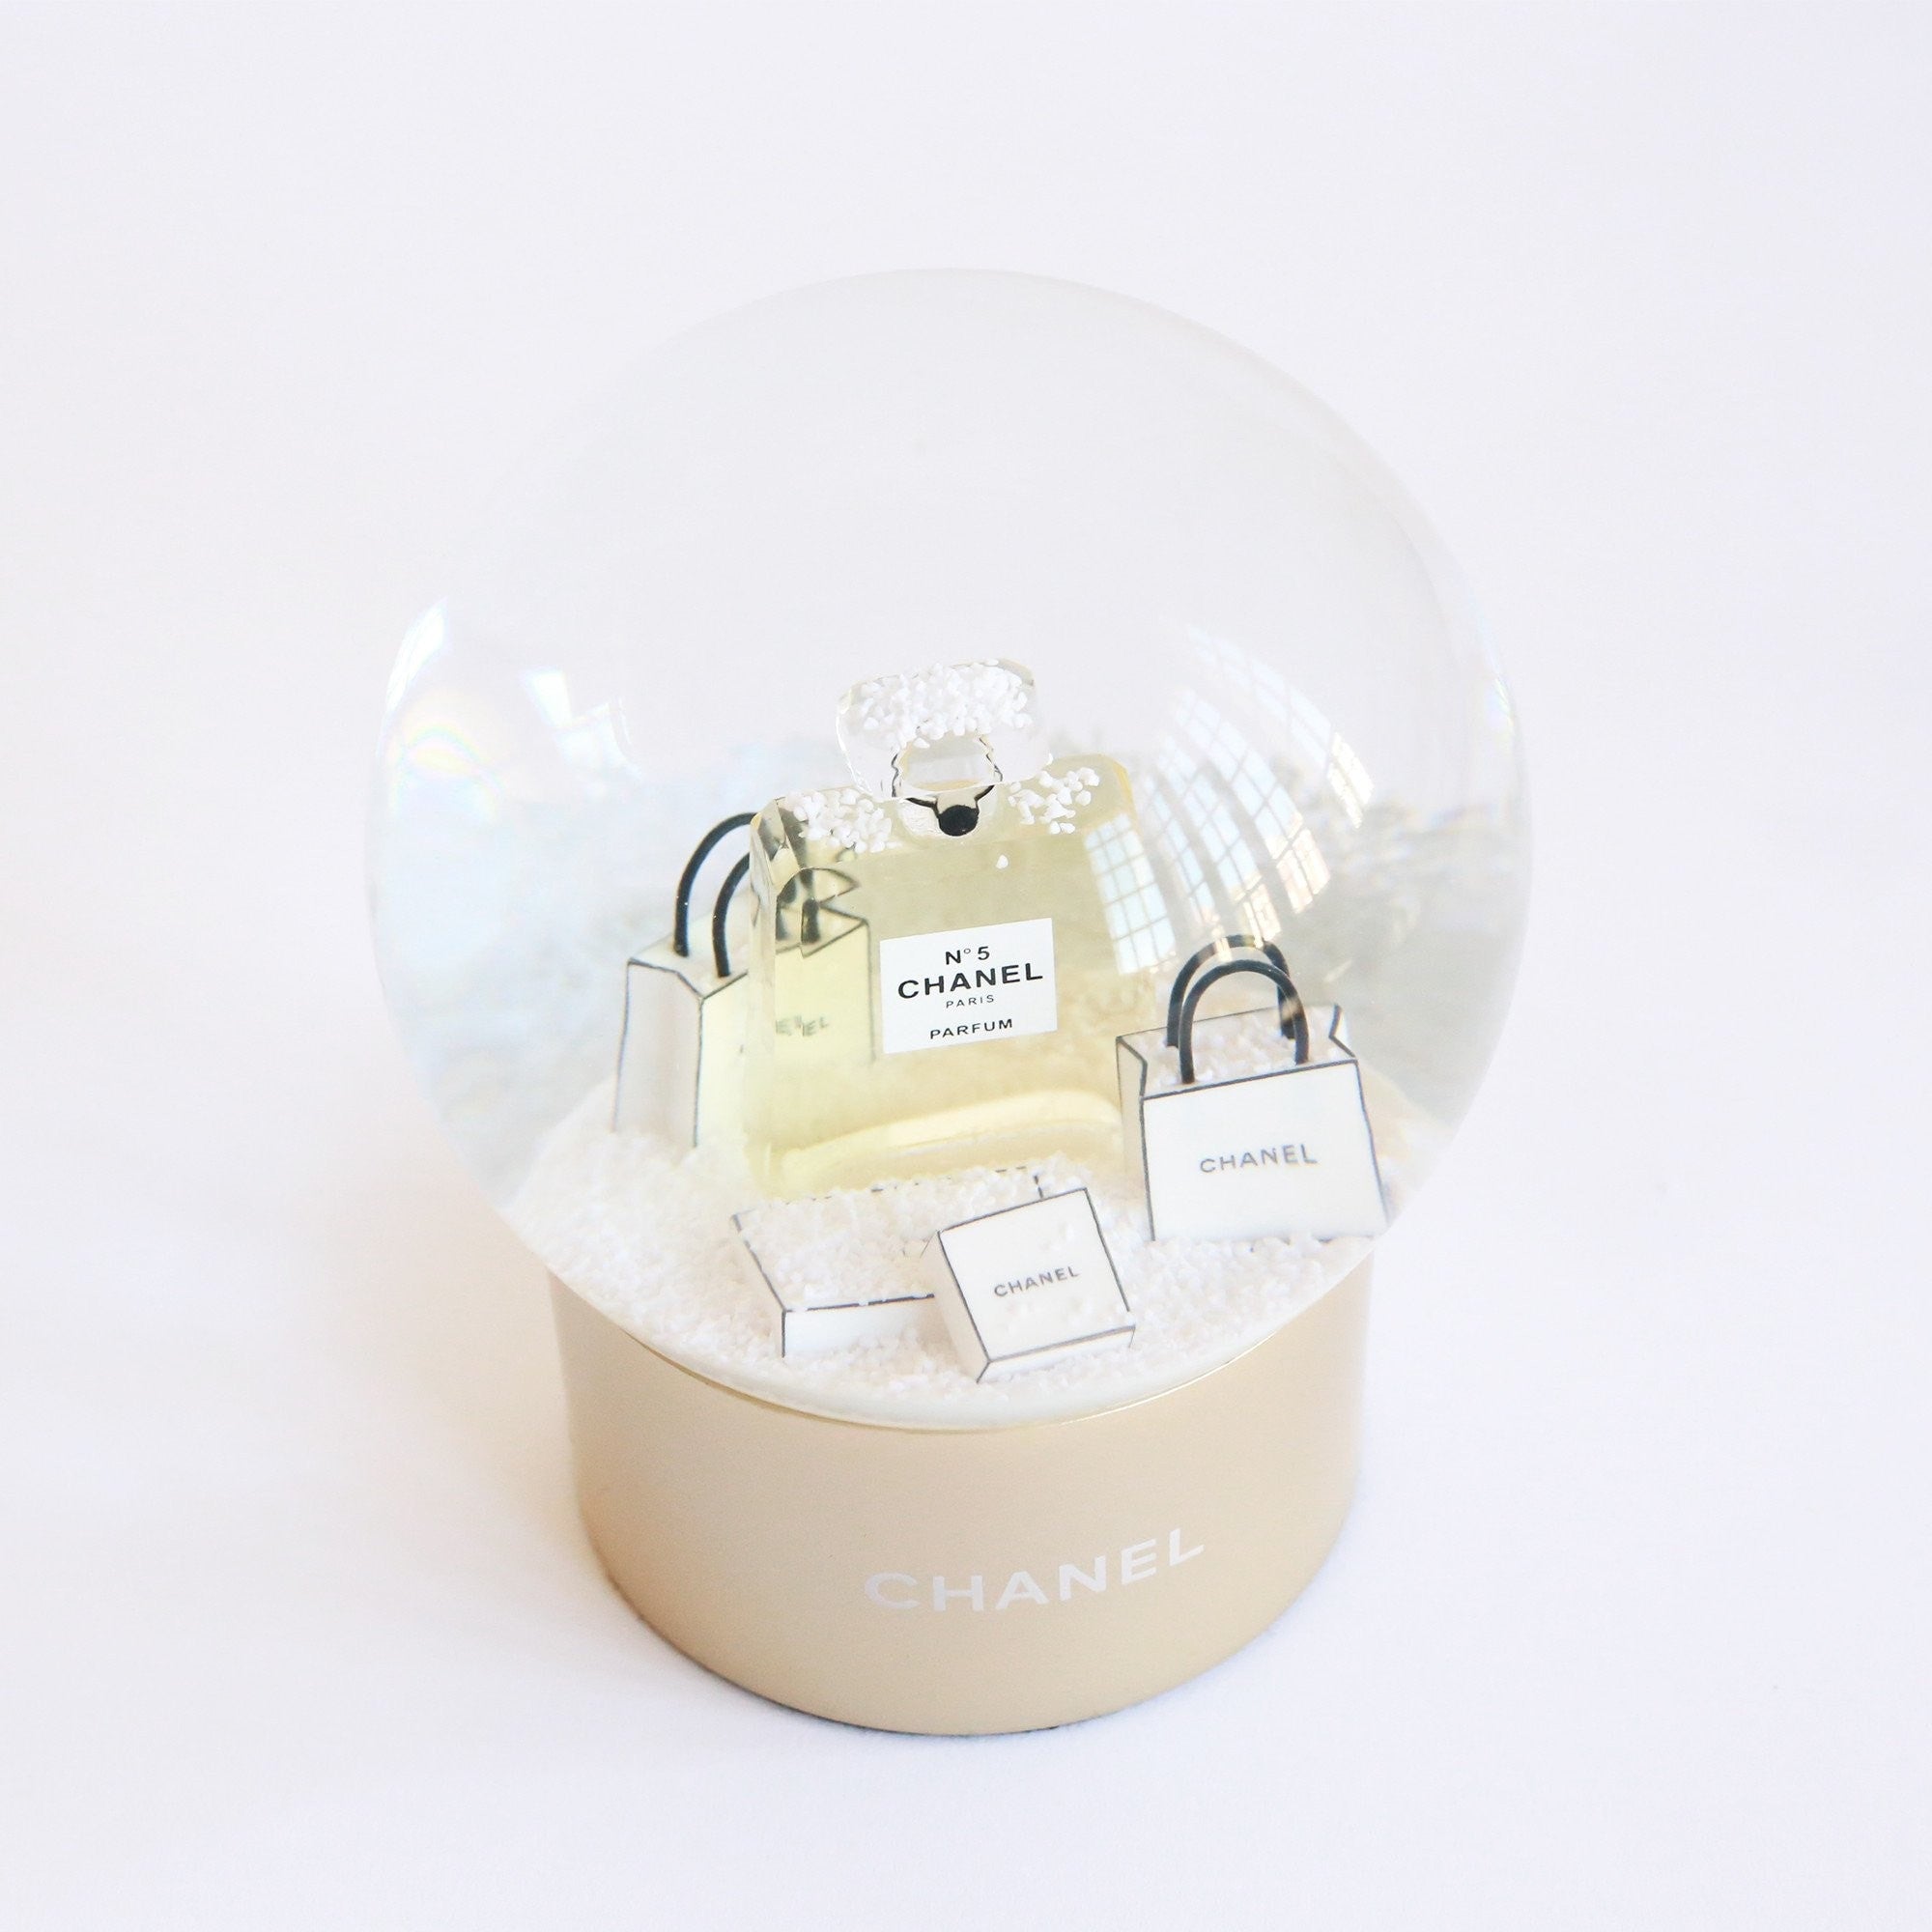 Chanel, Snow Globe Christmas Tree Perfume and Presents